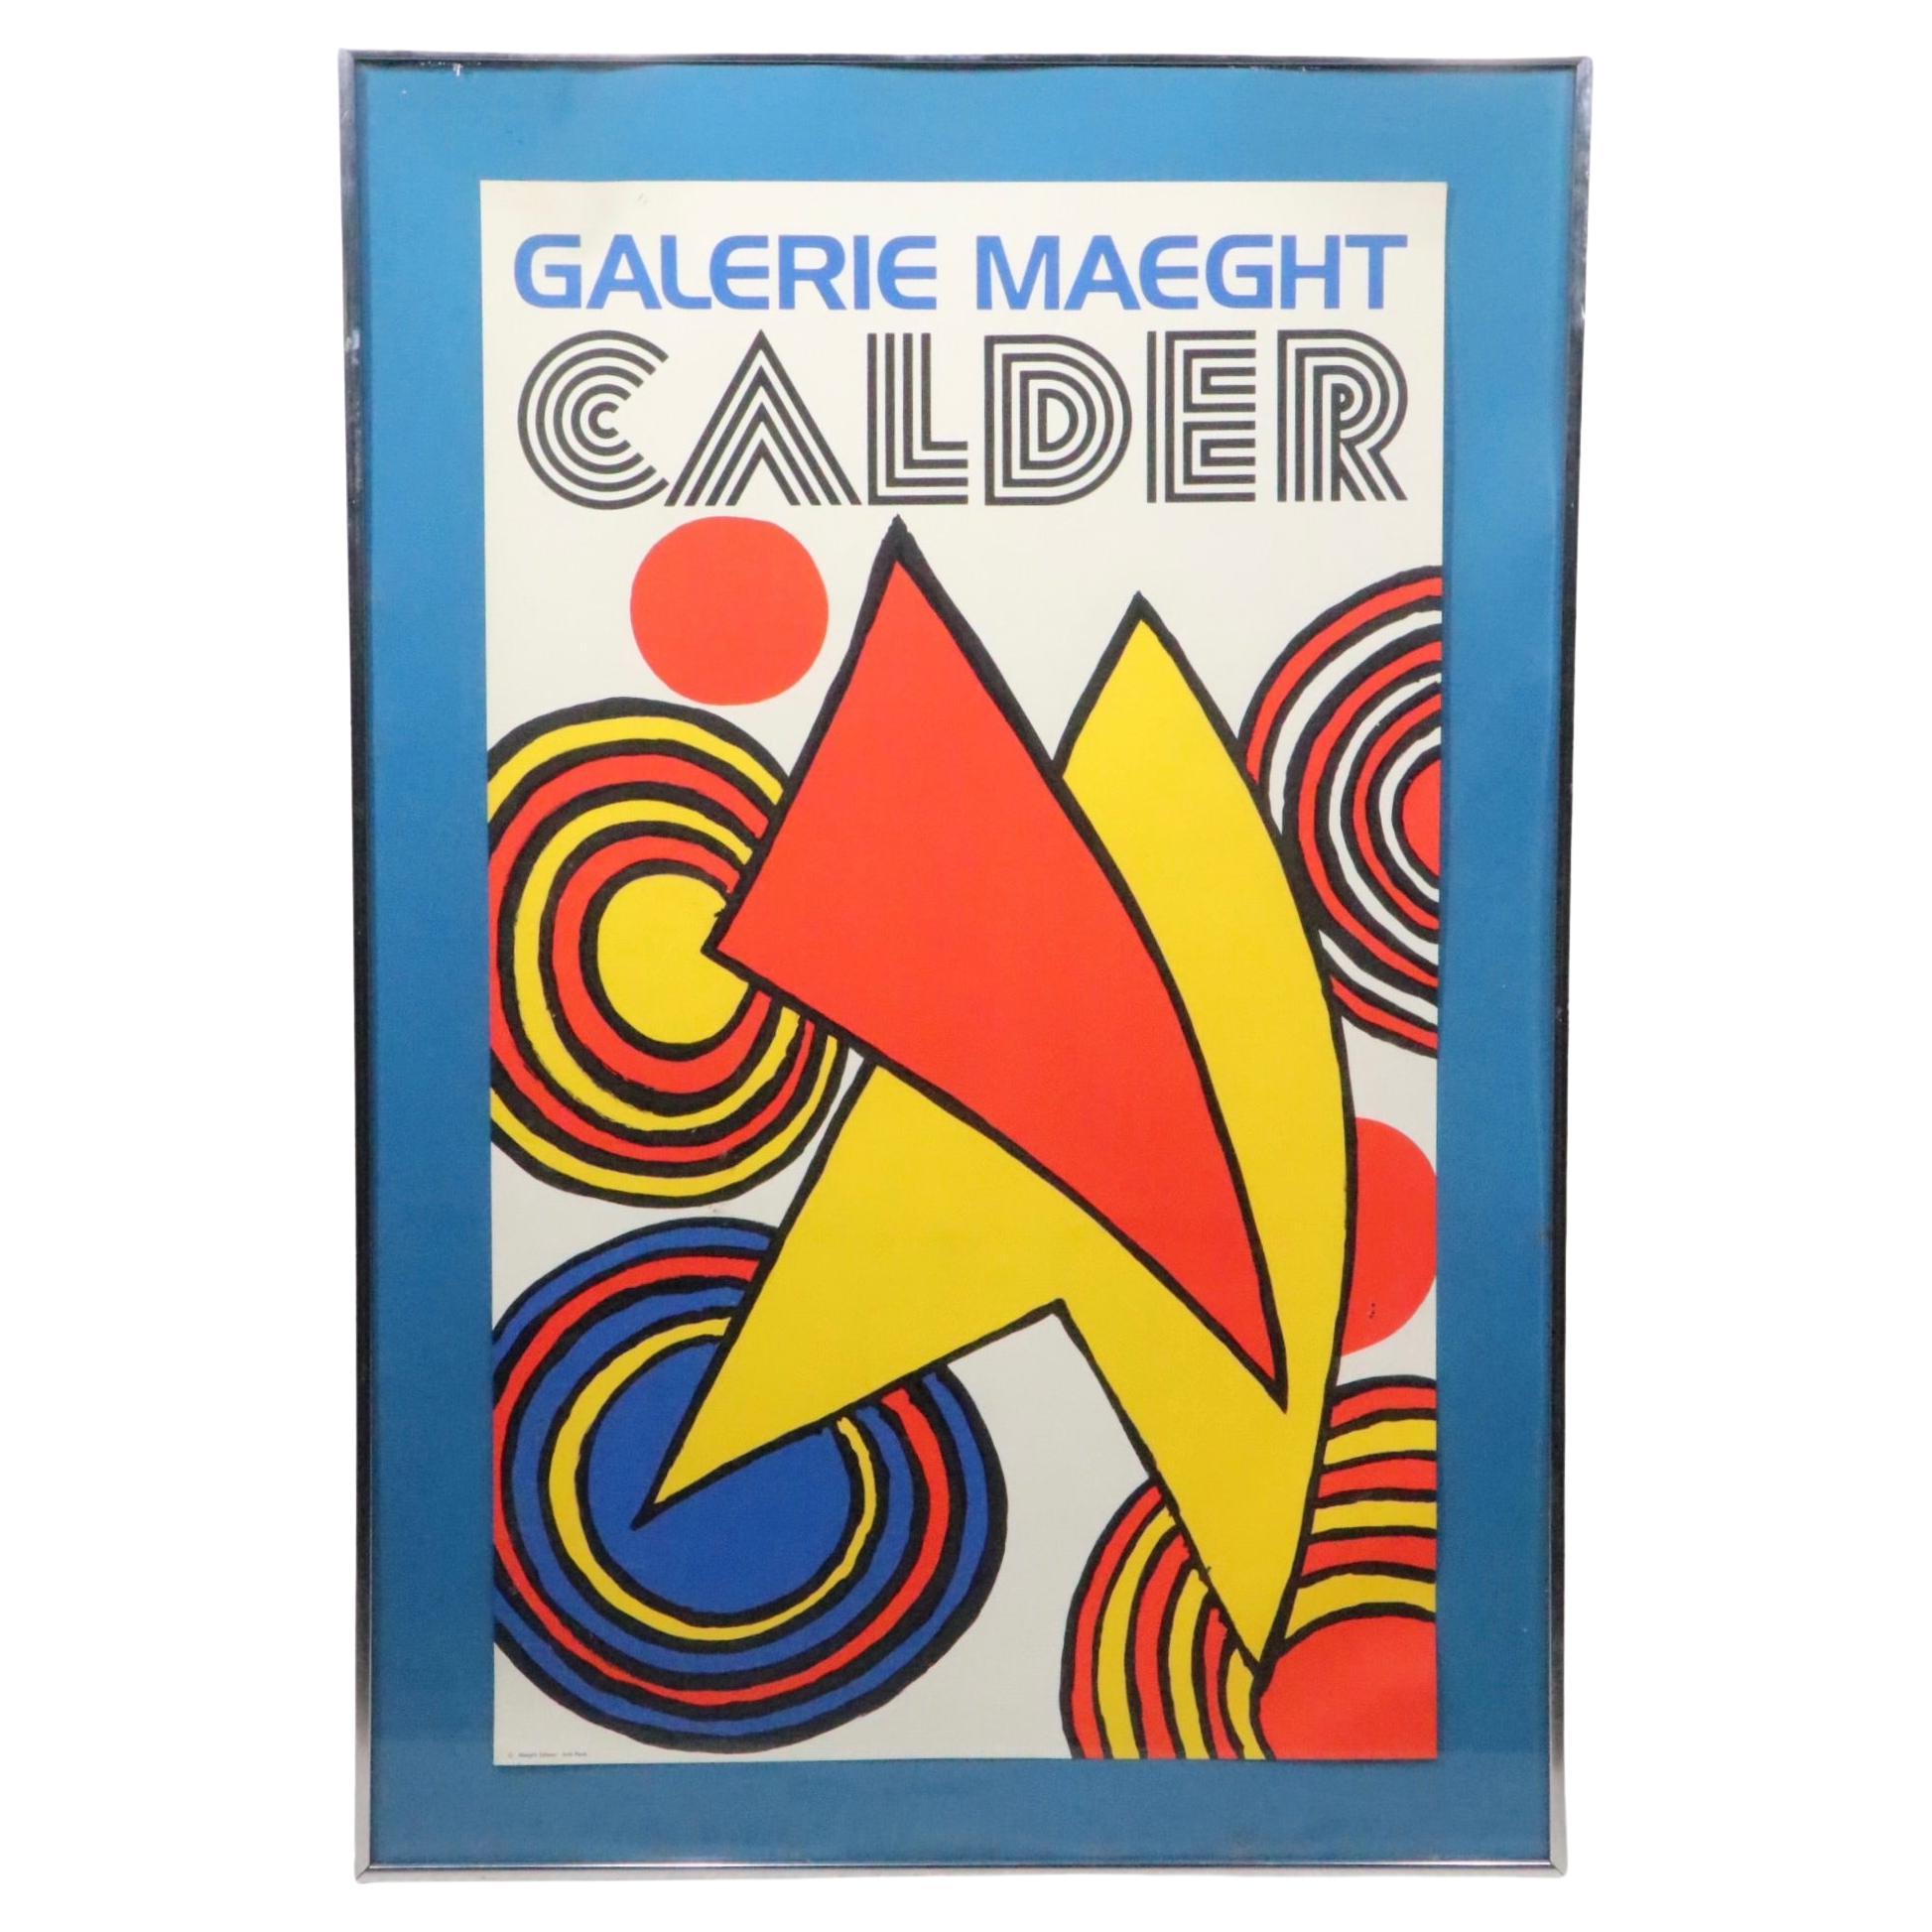  Framed Calder Galerie Maeght Lithograph  Poster Maeght Editeur - Arte Paris 70s For Sale